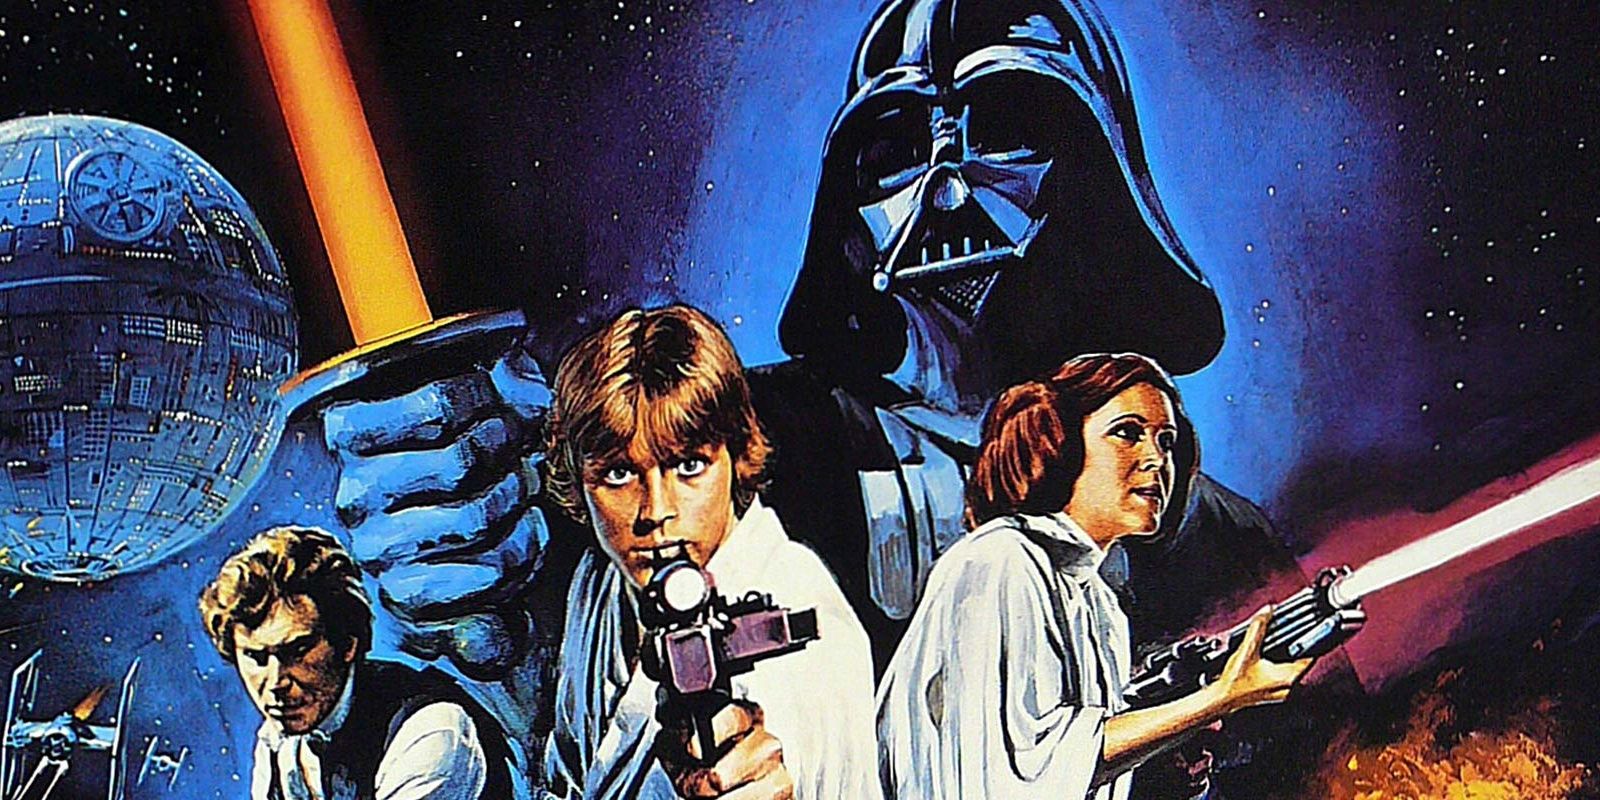 Original a new hope poster featuring Han Solo, Luke Skywalker, Darth Vader and Princess Leia